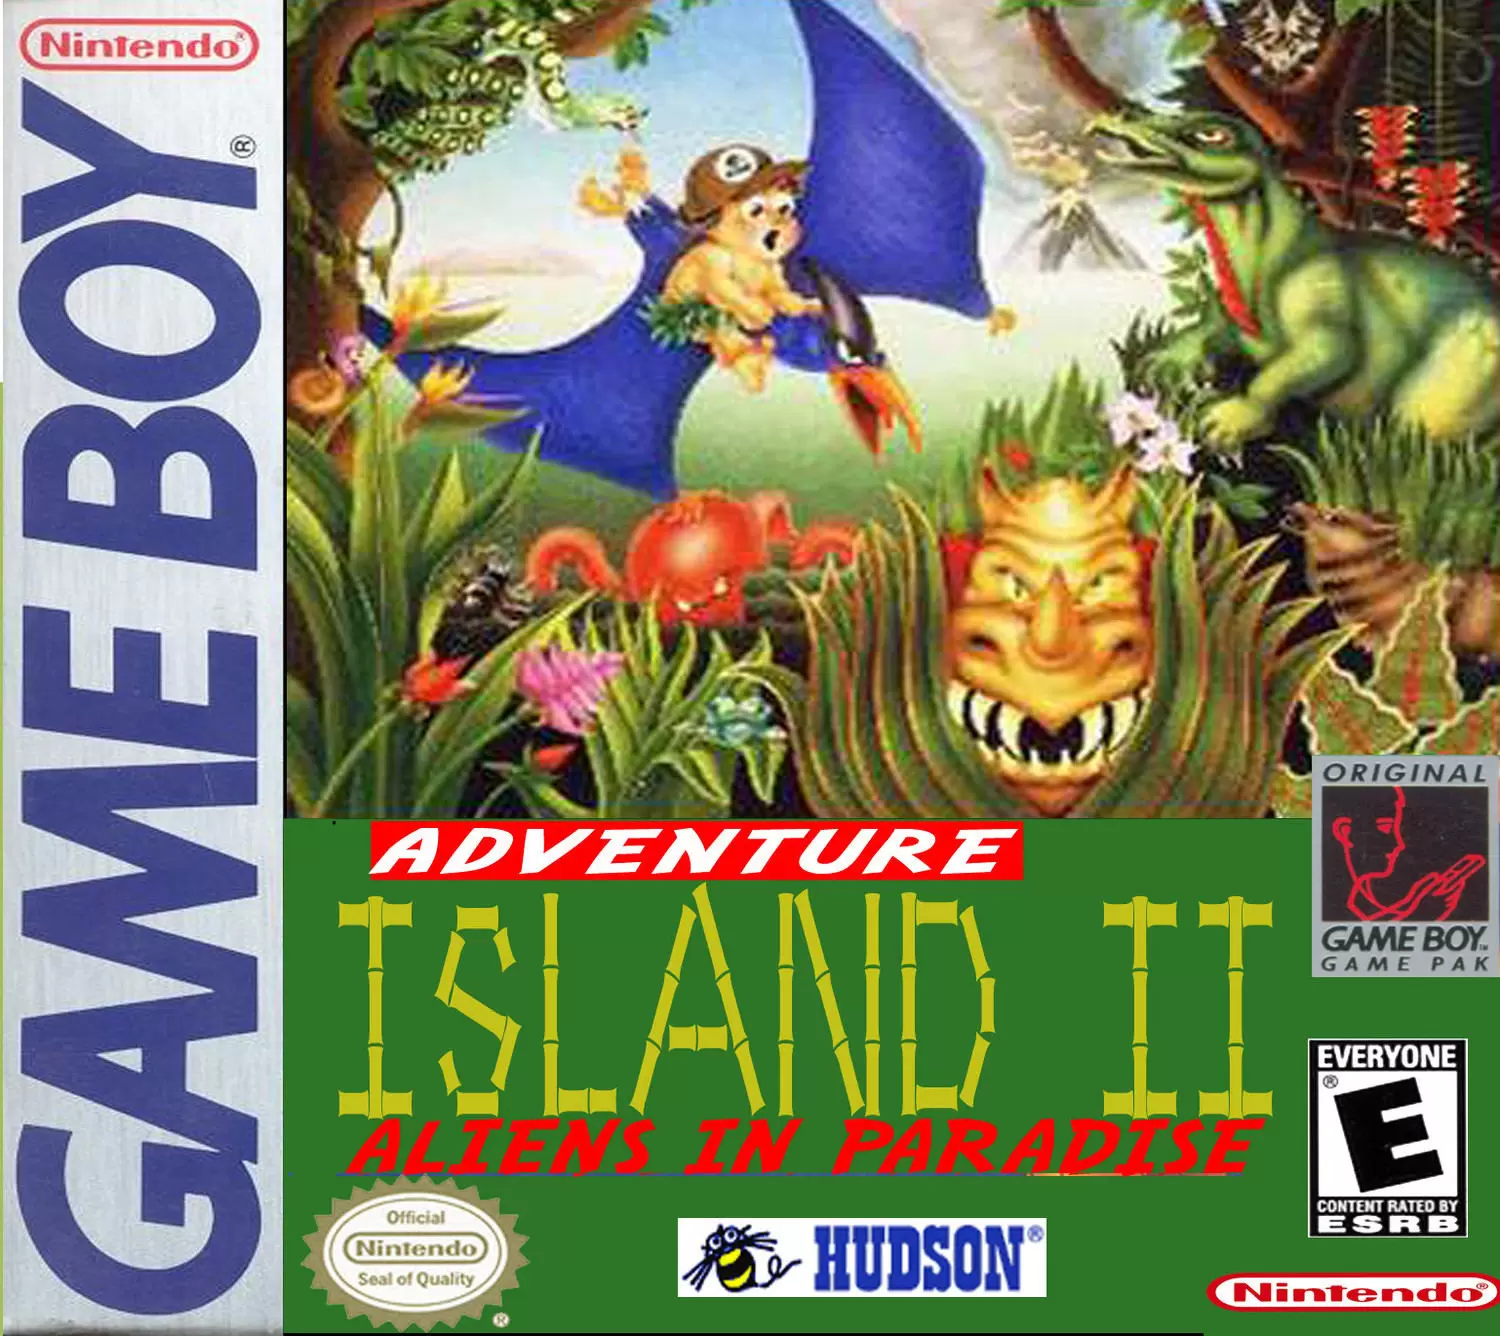 Game Boy Games - Adventure Island II